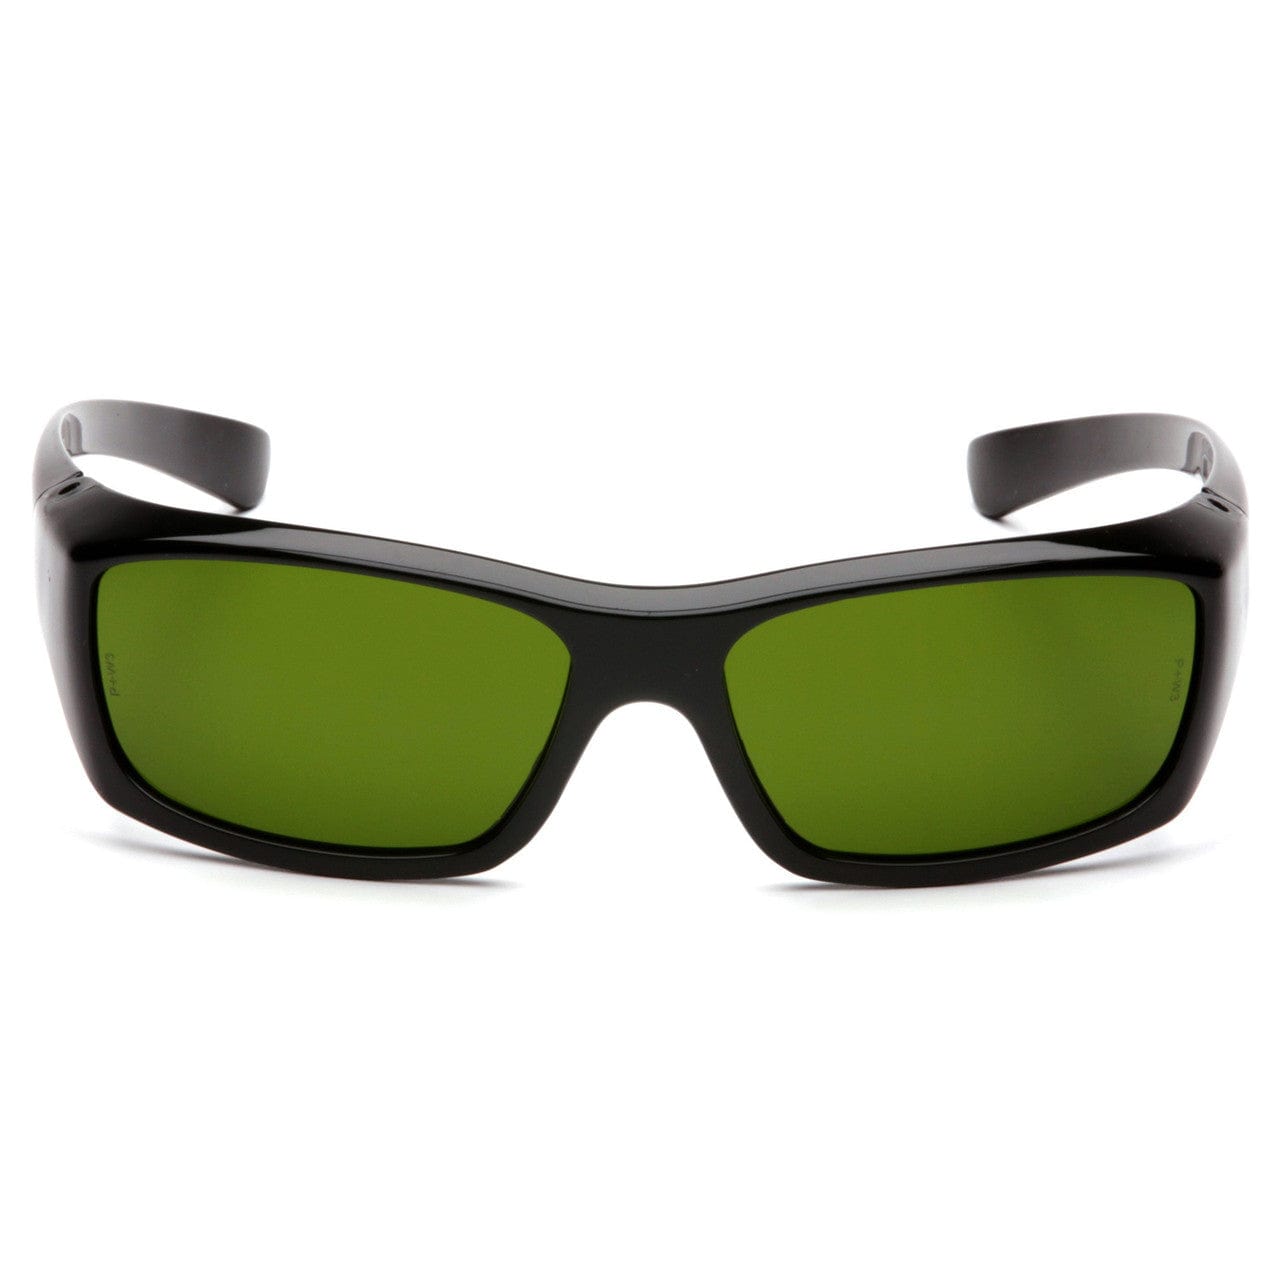 Pyramex Emerge Safety Glasses Black Frame IR Shade 3.0 Lens SB7960SF Front